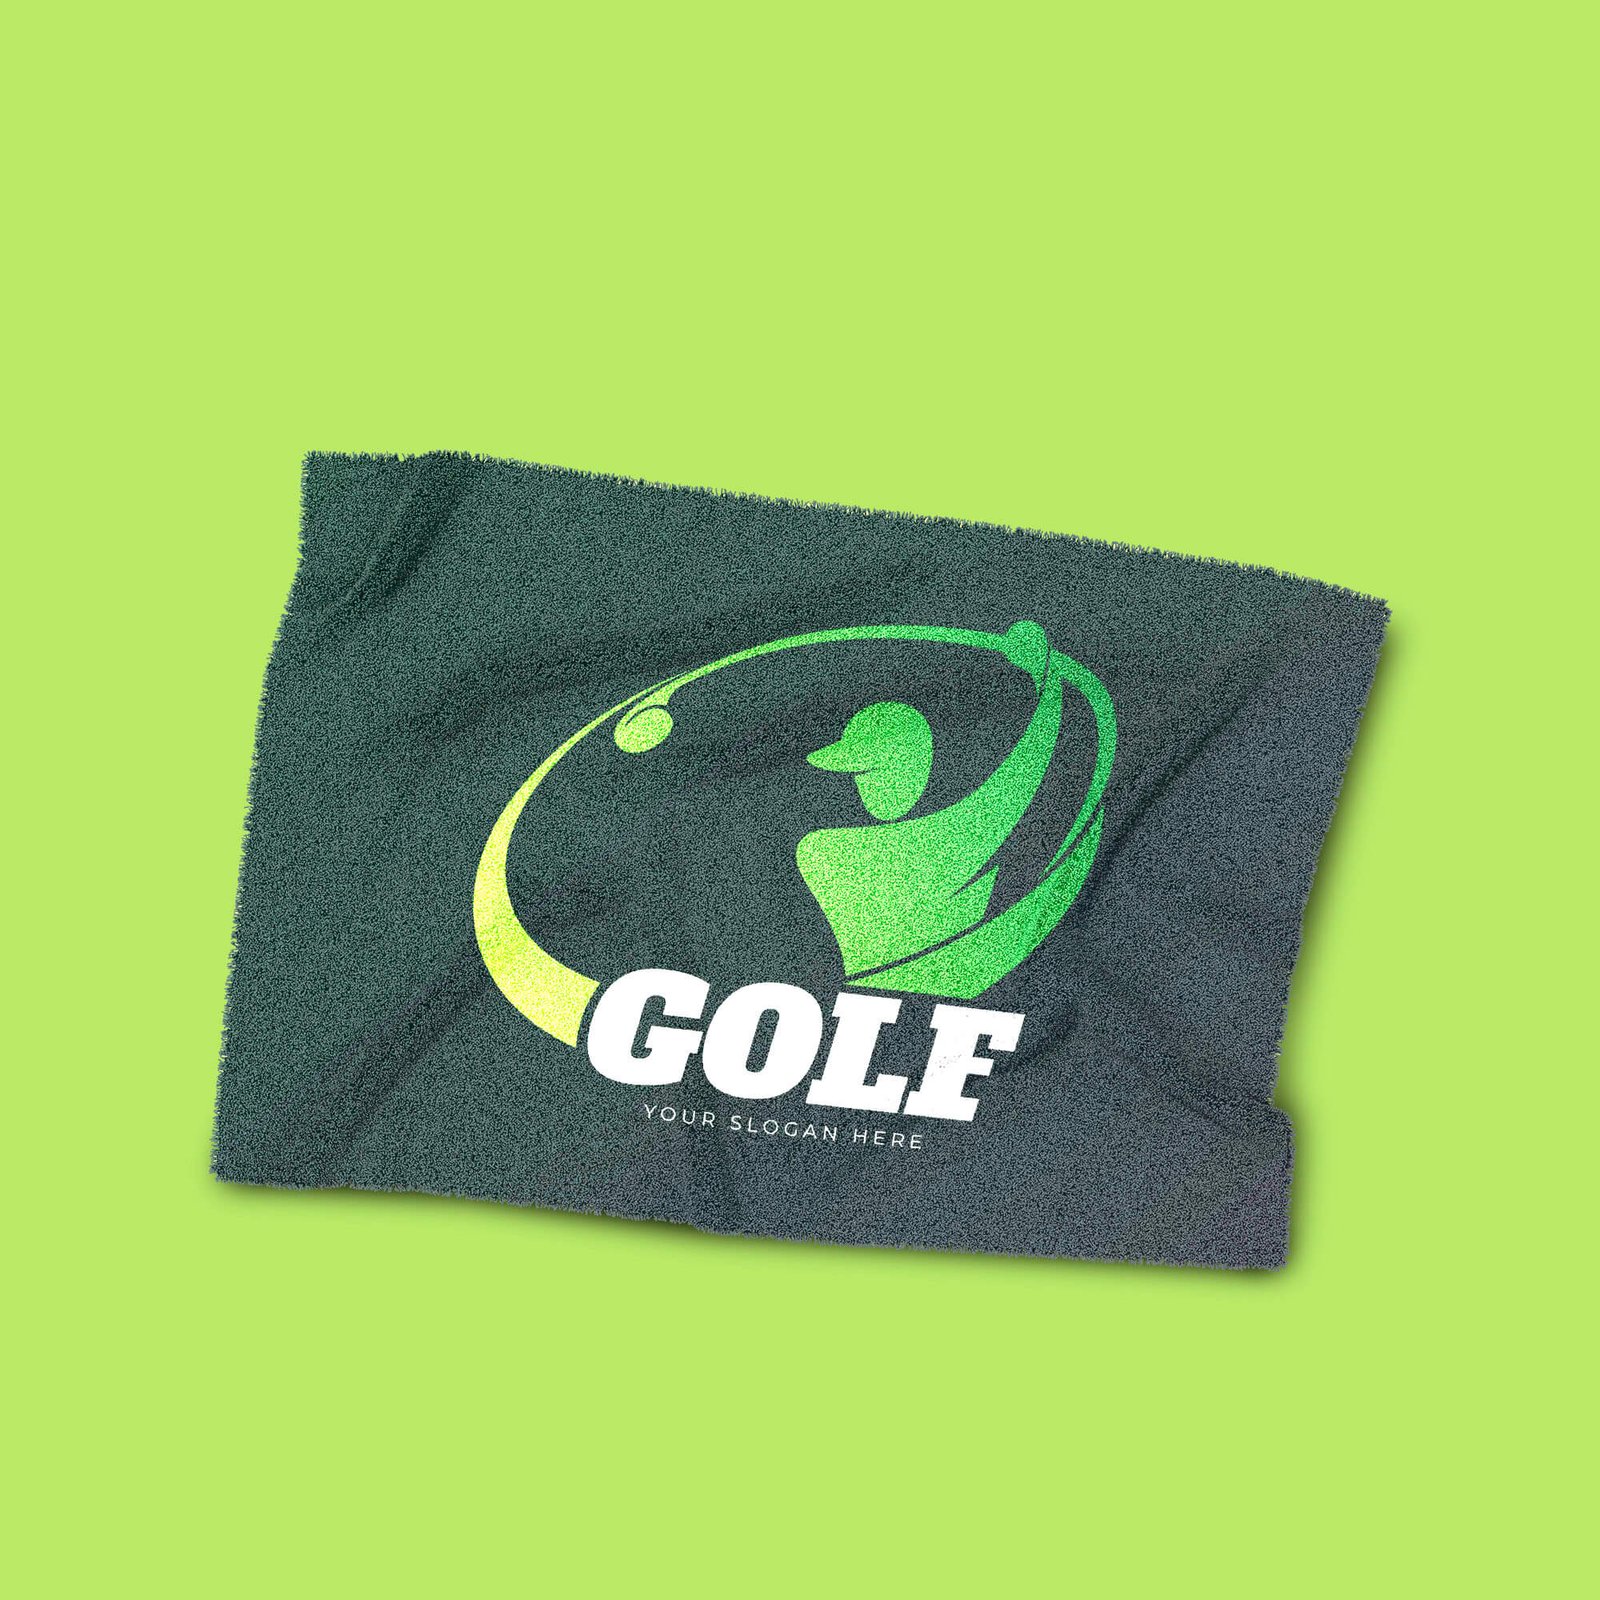 Design Free Golf Towel Mockup PSD Template